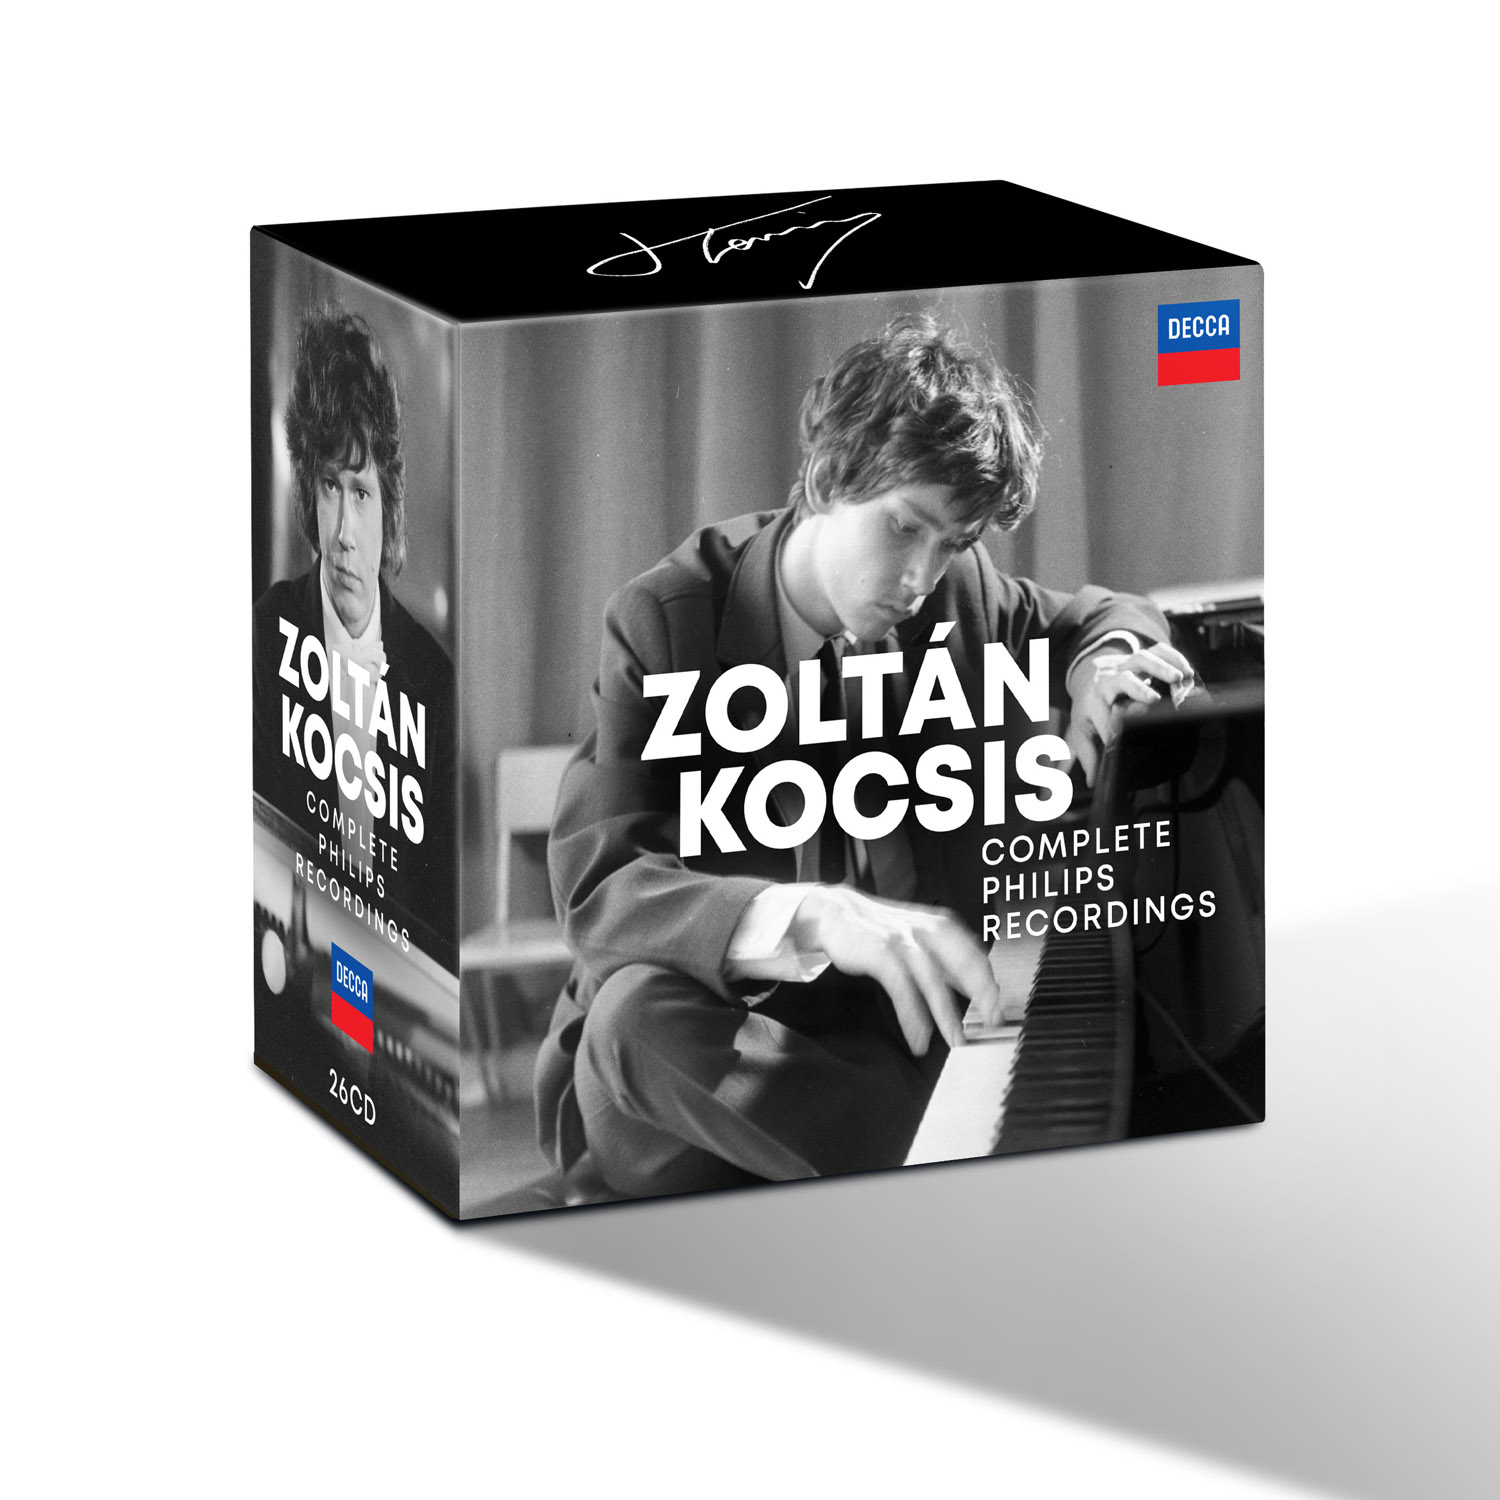 Zoltan Kocsis 졸탄 코치슈 필립스 녹음 전집 (Complete Philips Recordings) 